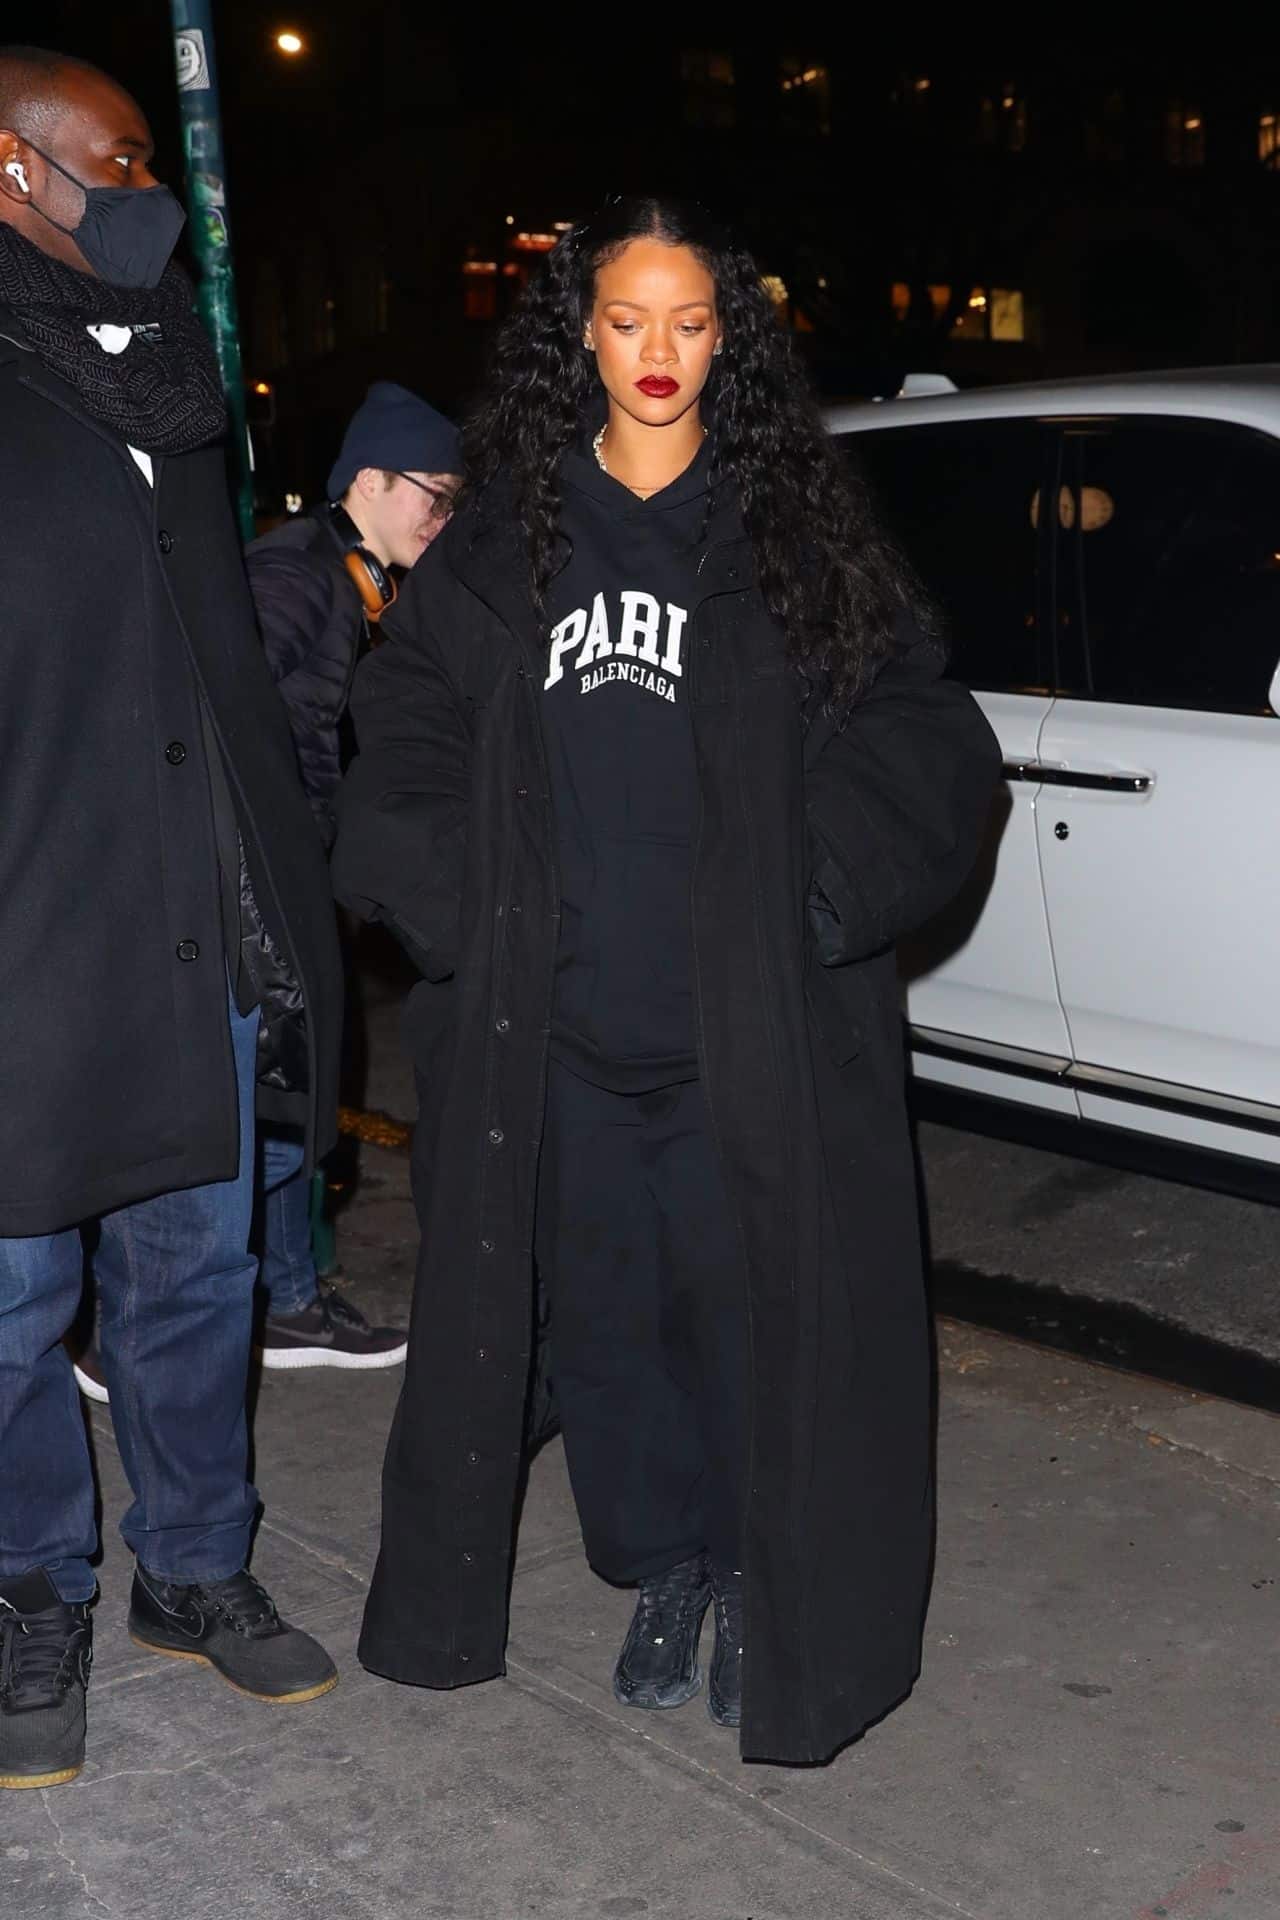 Rihanna Wore an All-black Outfit as She Shopped at the Bottega Veneta Store